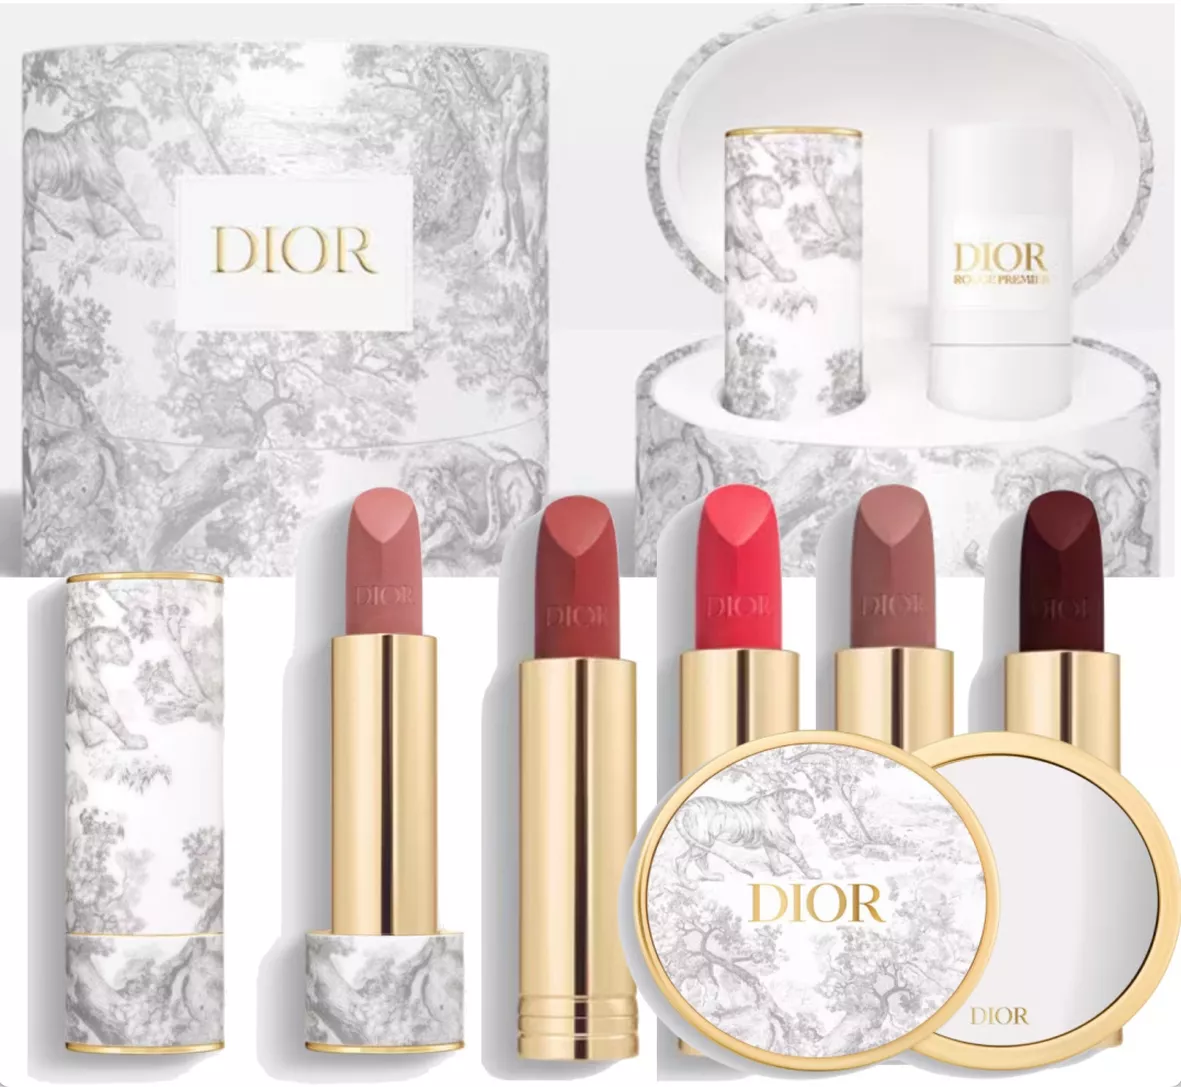 Dior gift set $70 includes bag : r/MUAontheCheap